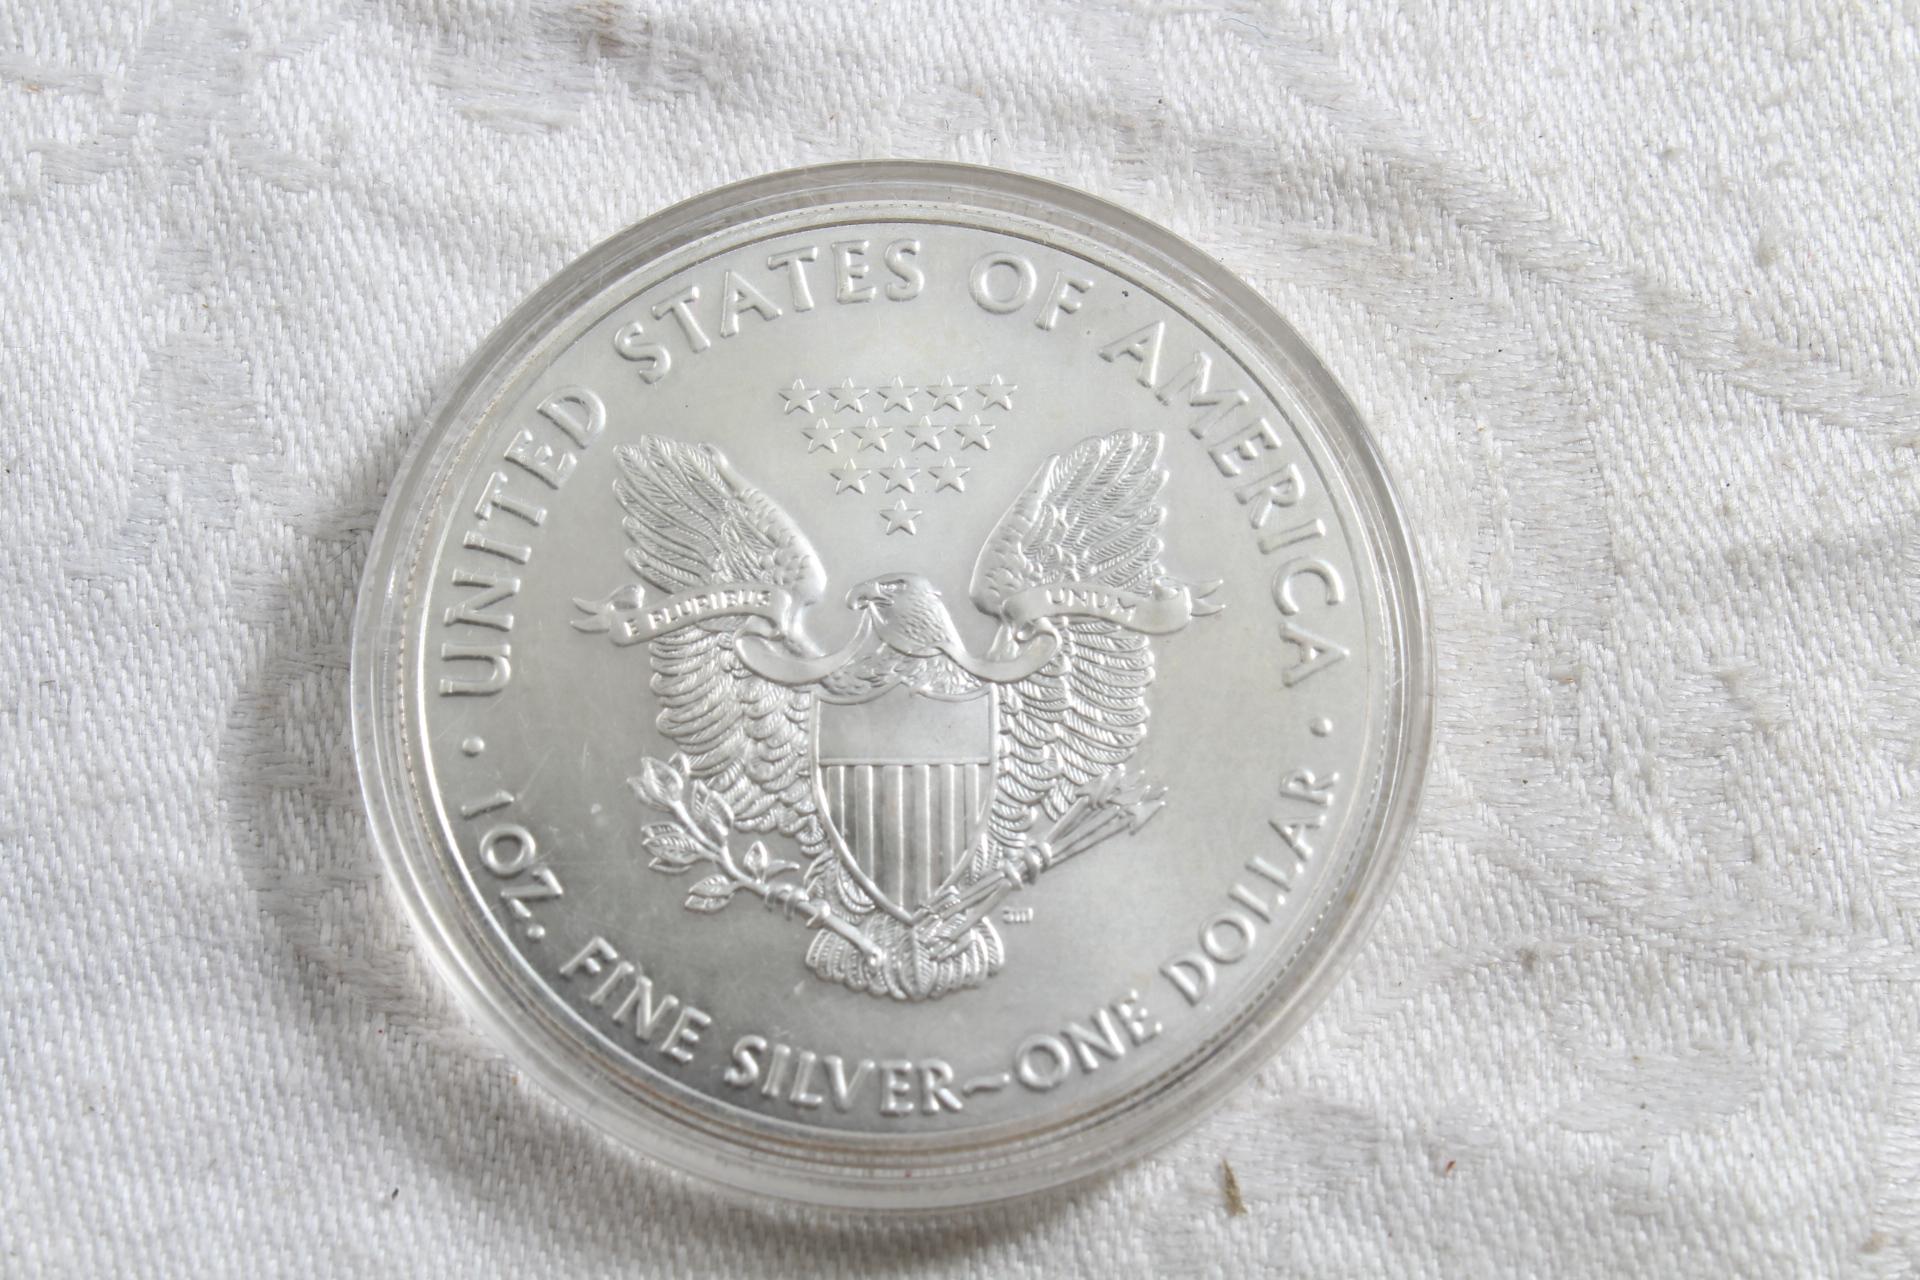 2010 One Ounce Silver Eagle Coin